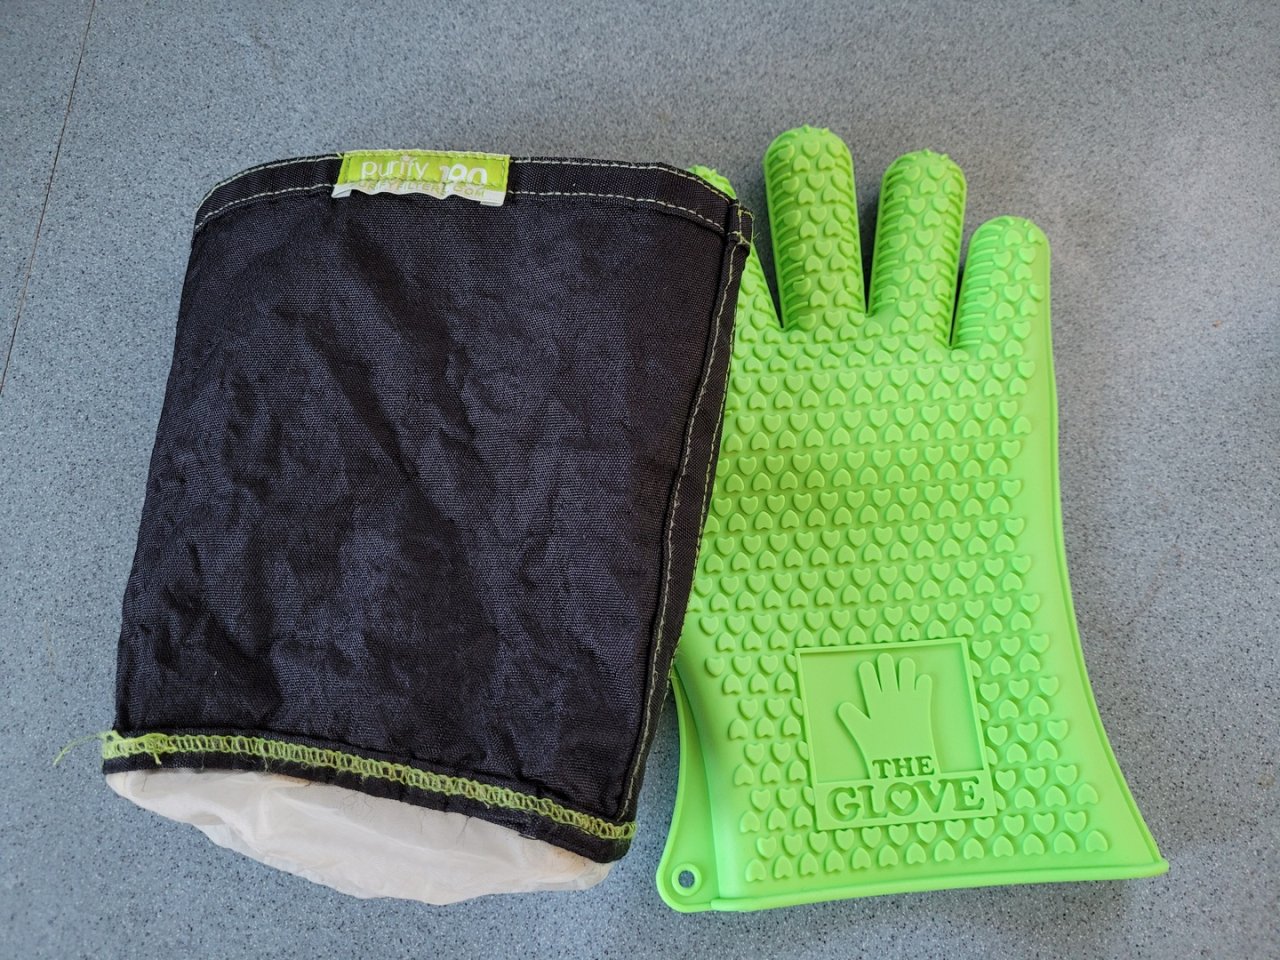 20221023_130145 MB glove and straining bag.jpg